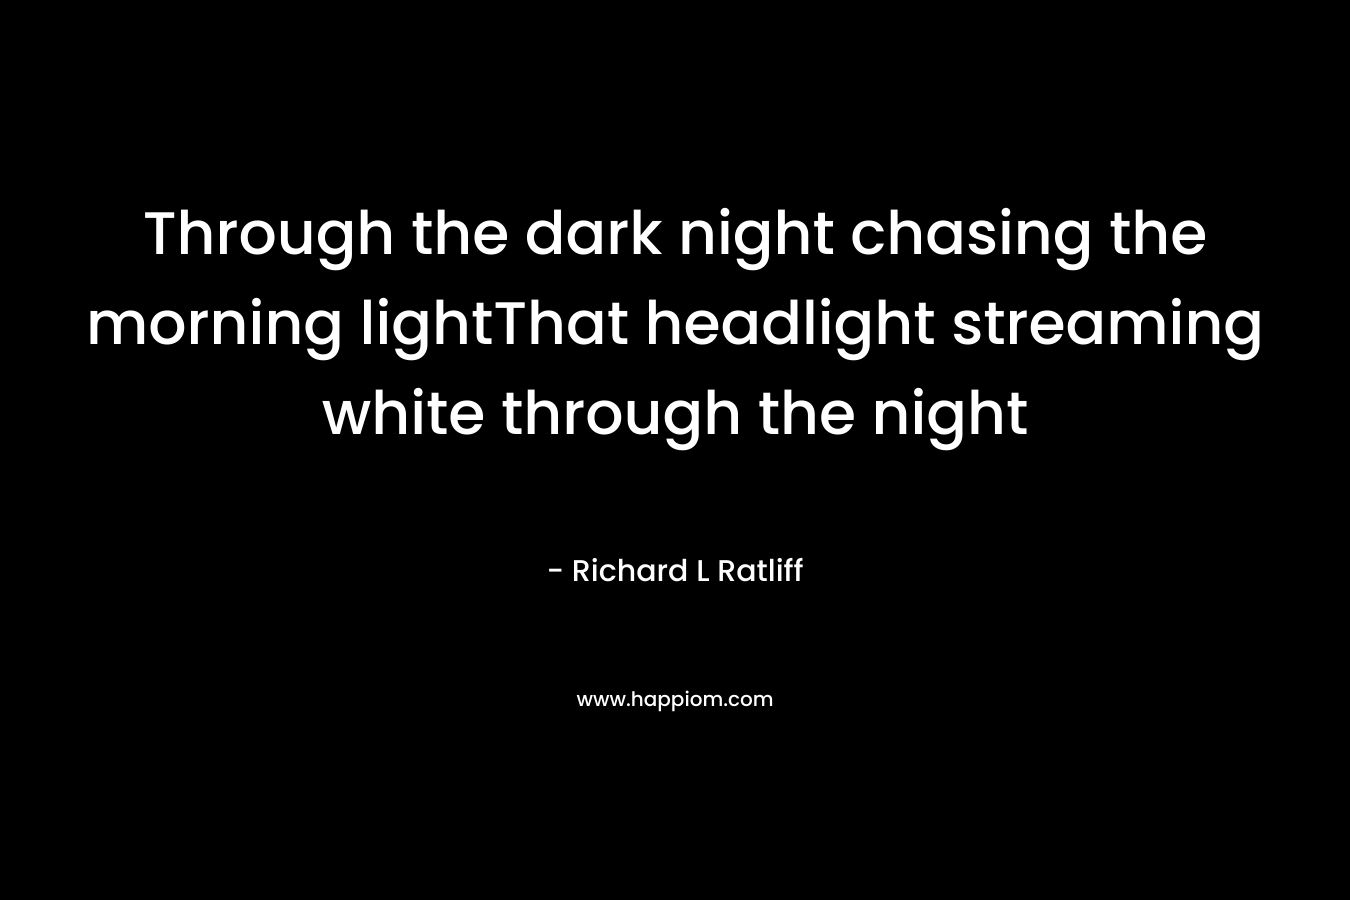 Through the dark night chasing the morning lightThat headlight streaming white through the night